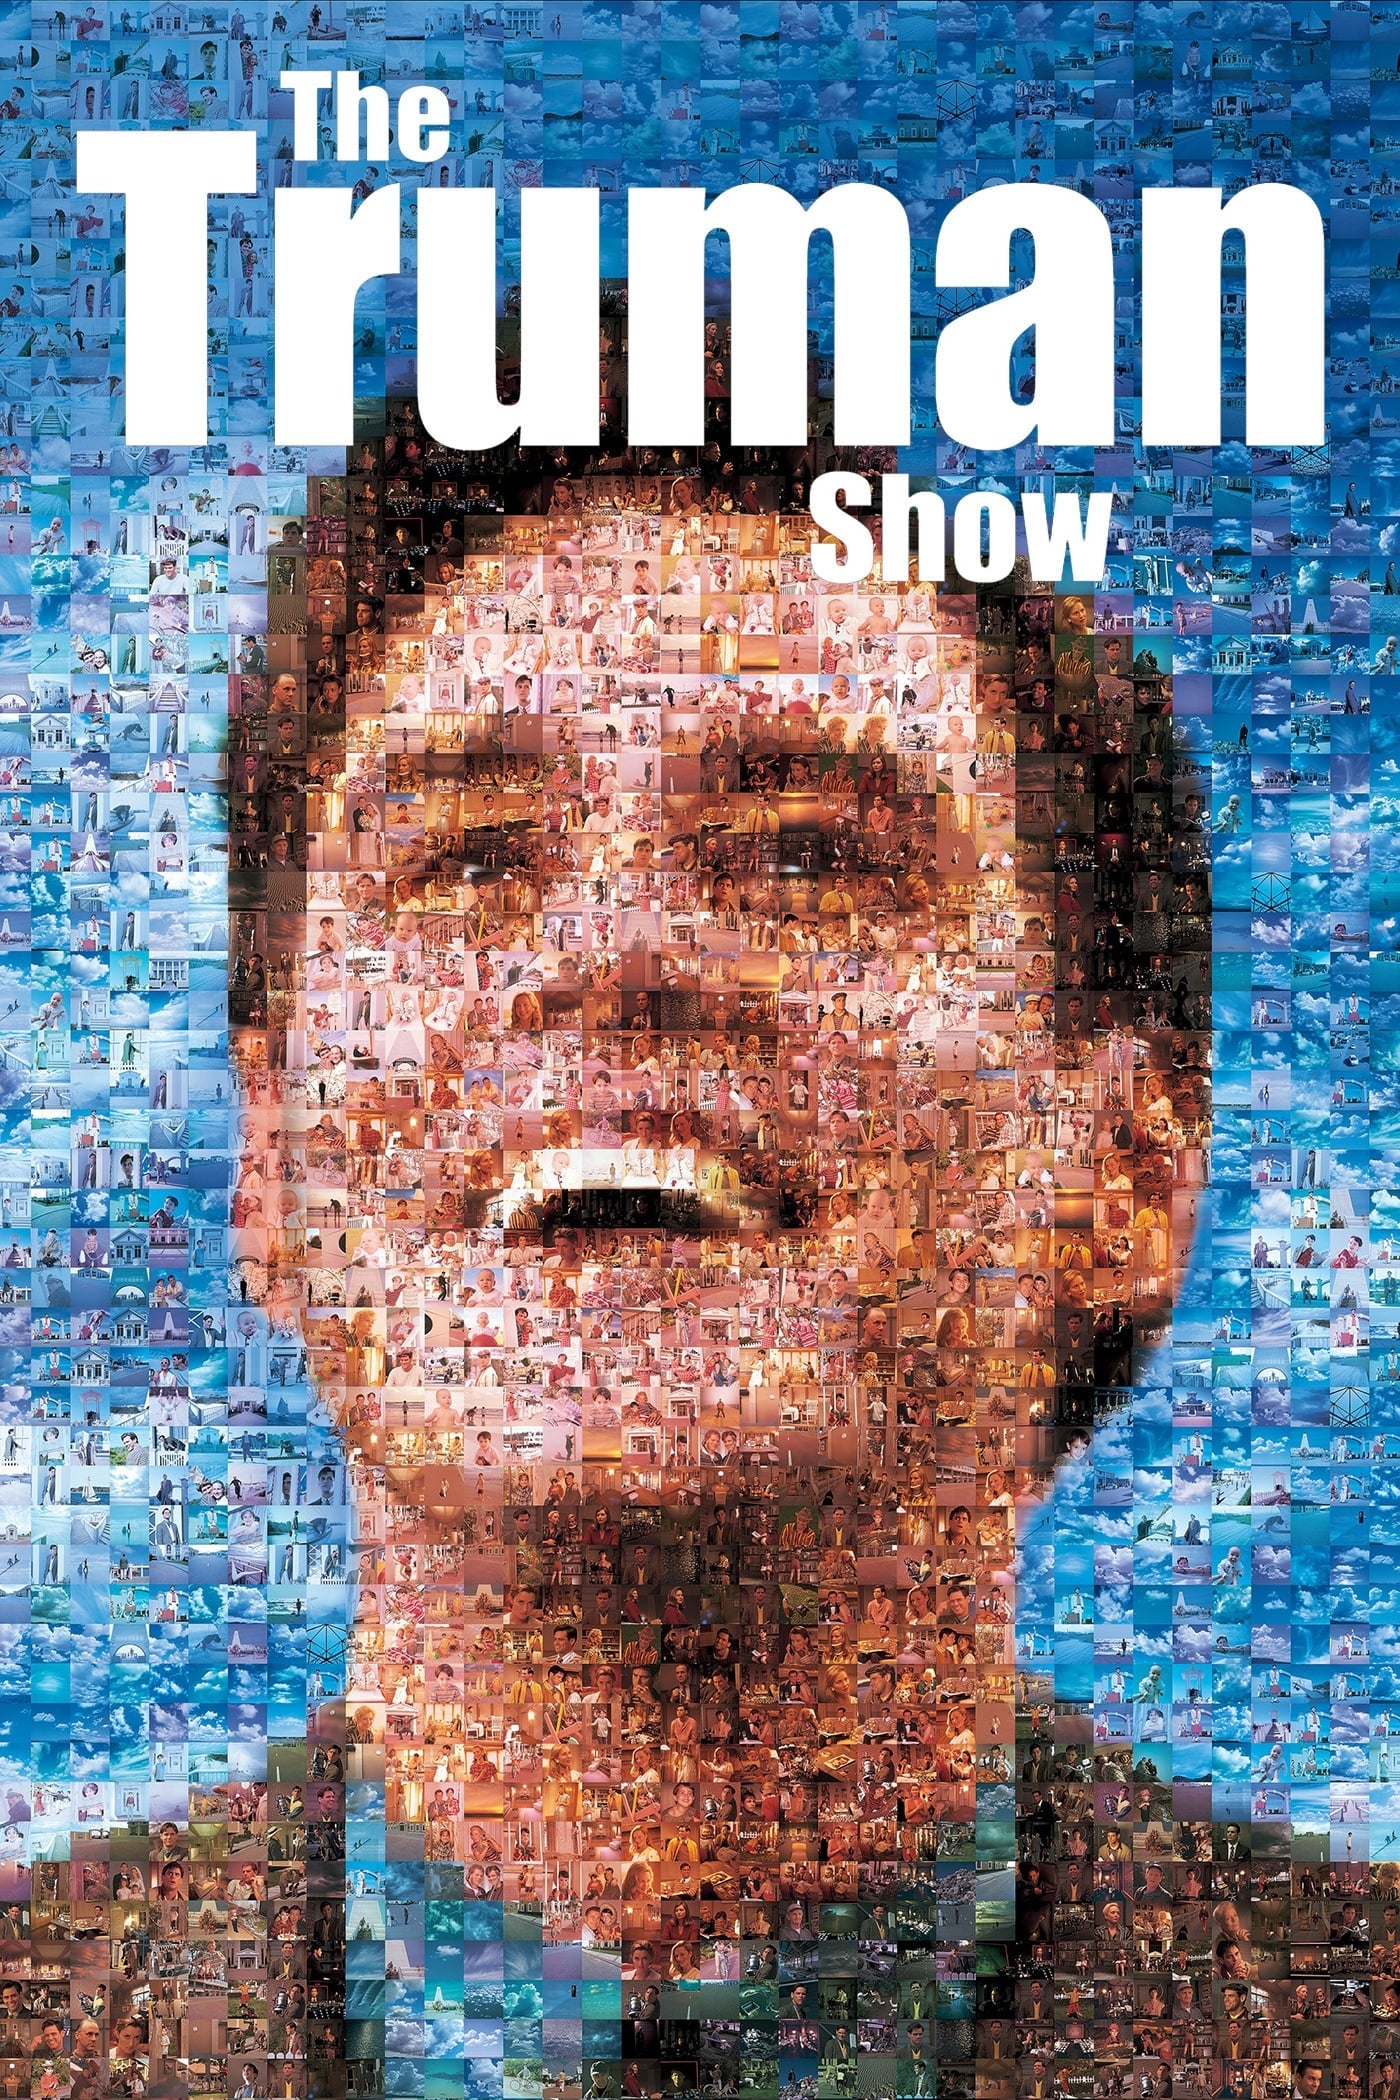 Die Truman Show (1998)